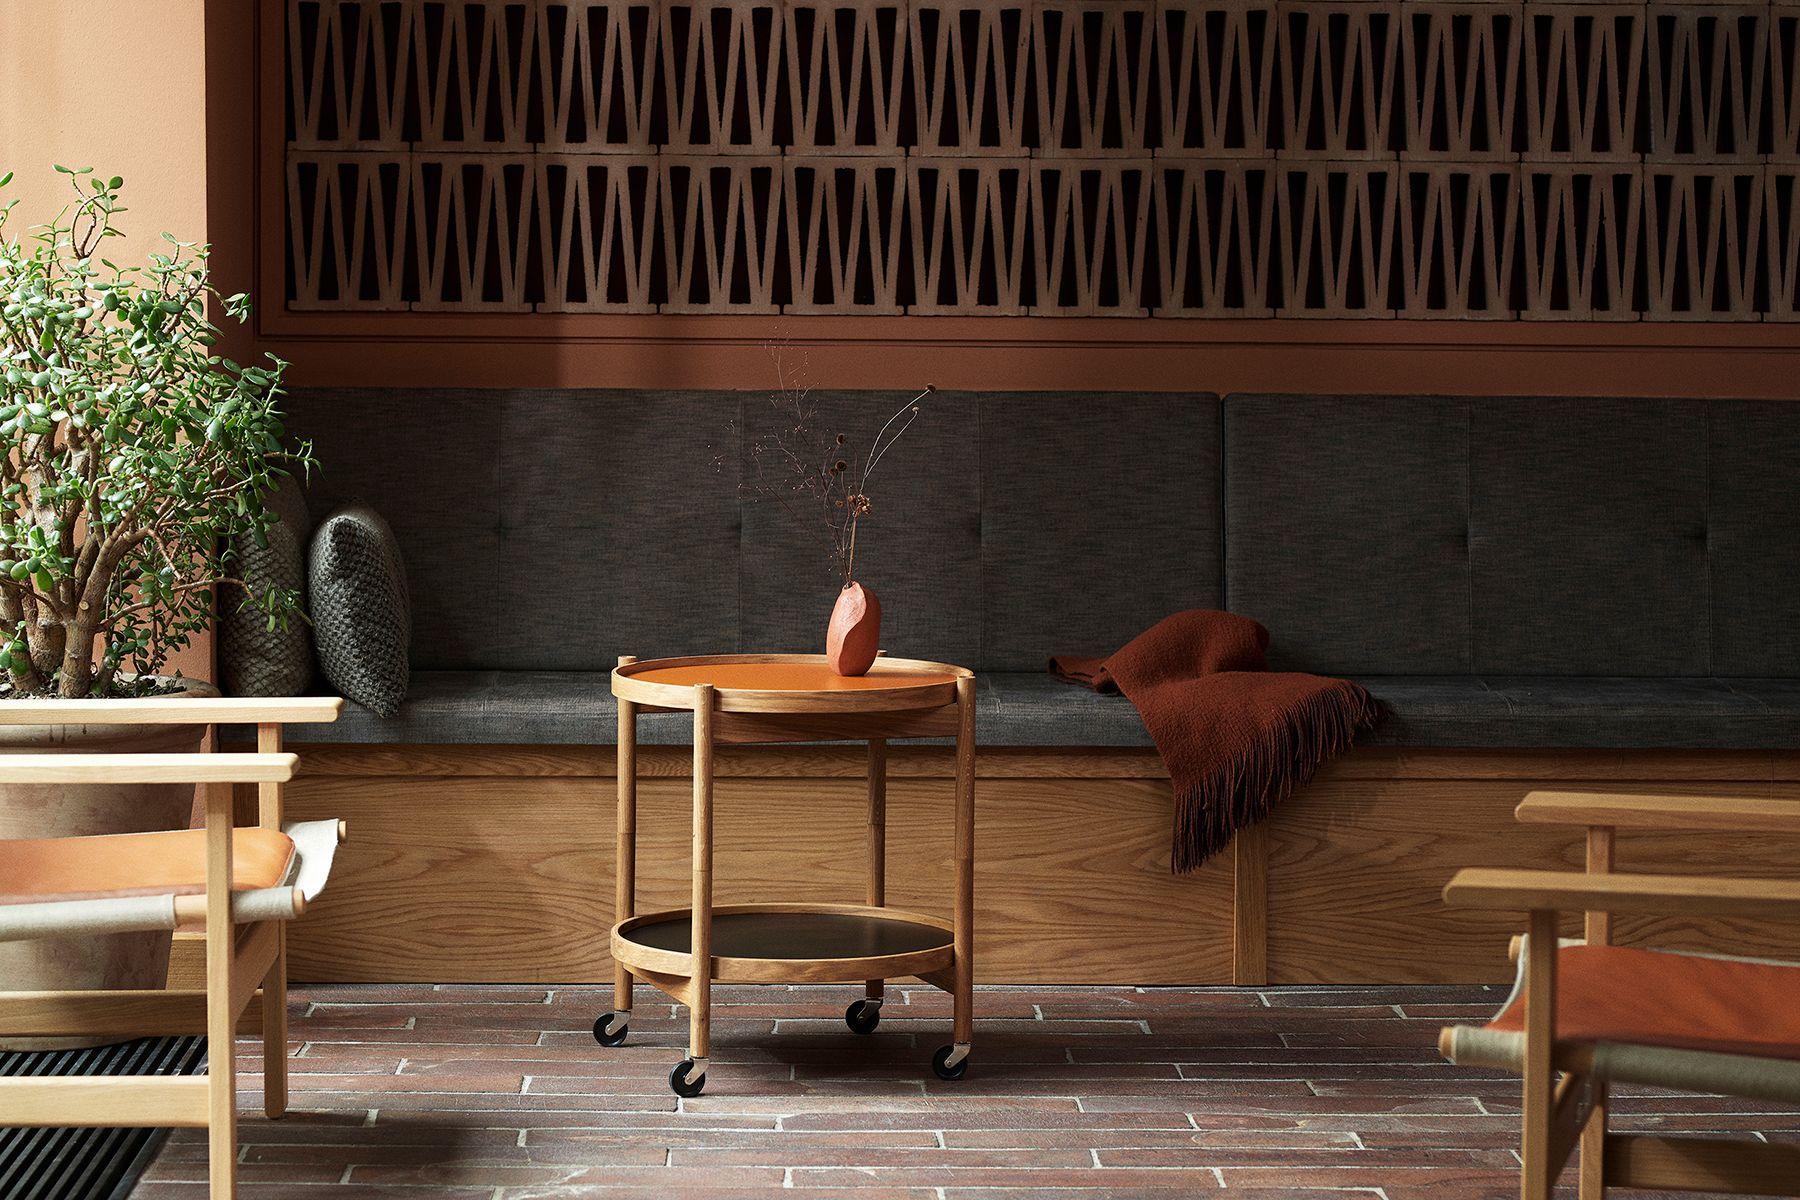 Furniture From Scandinavia Creating Stylish and Minimalist Home Decor with Scandinavian Design